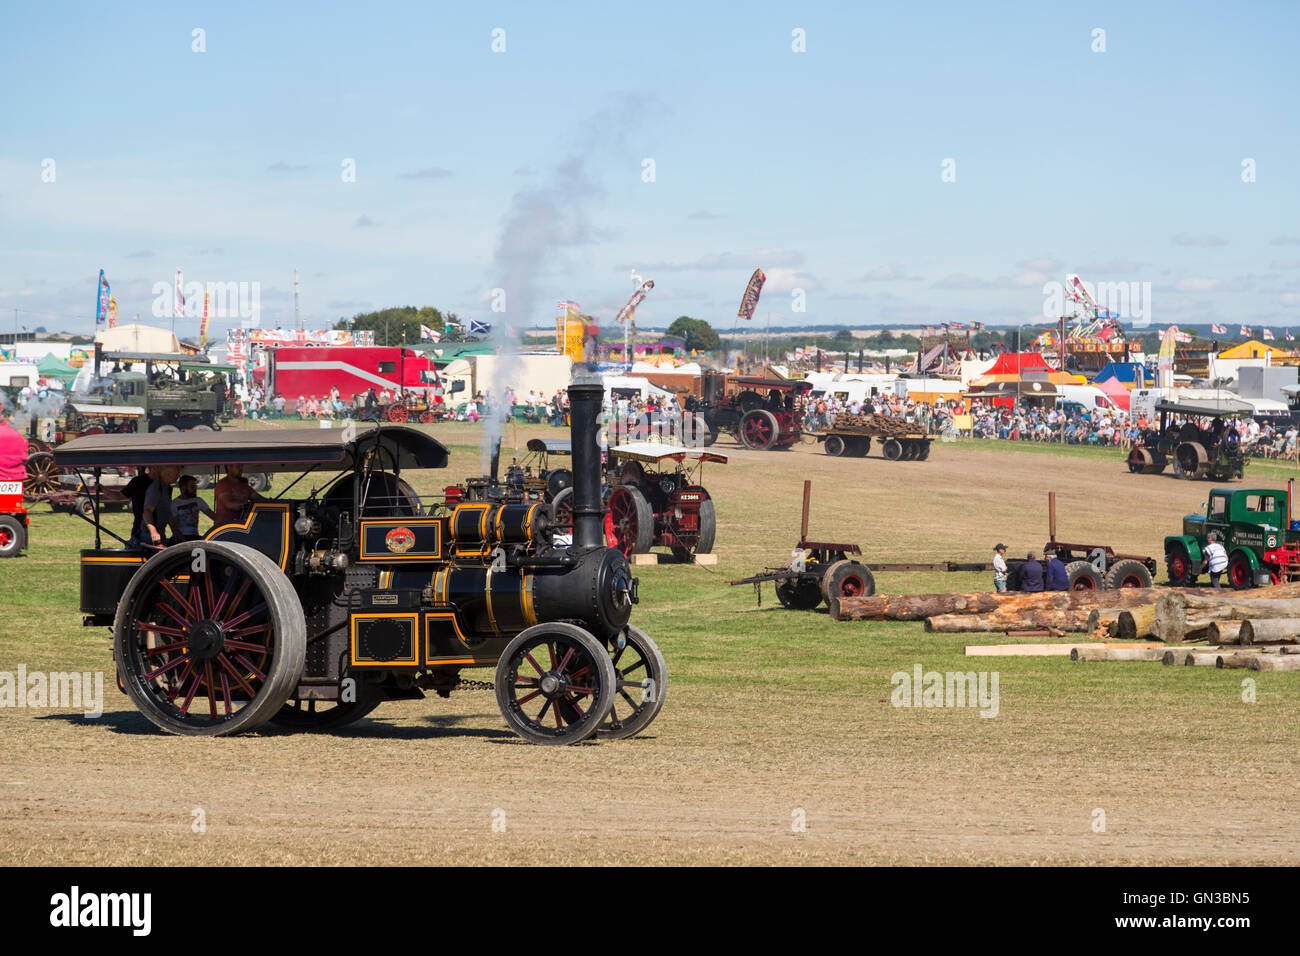 Colossus Steam Locomotive at great dorset steam fair august 2016 Stock Photo